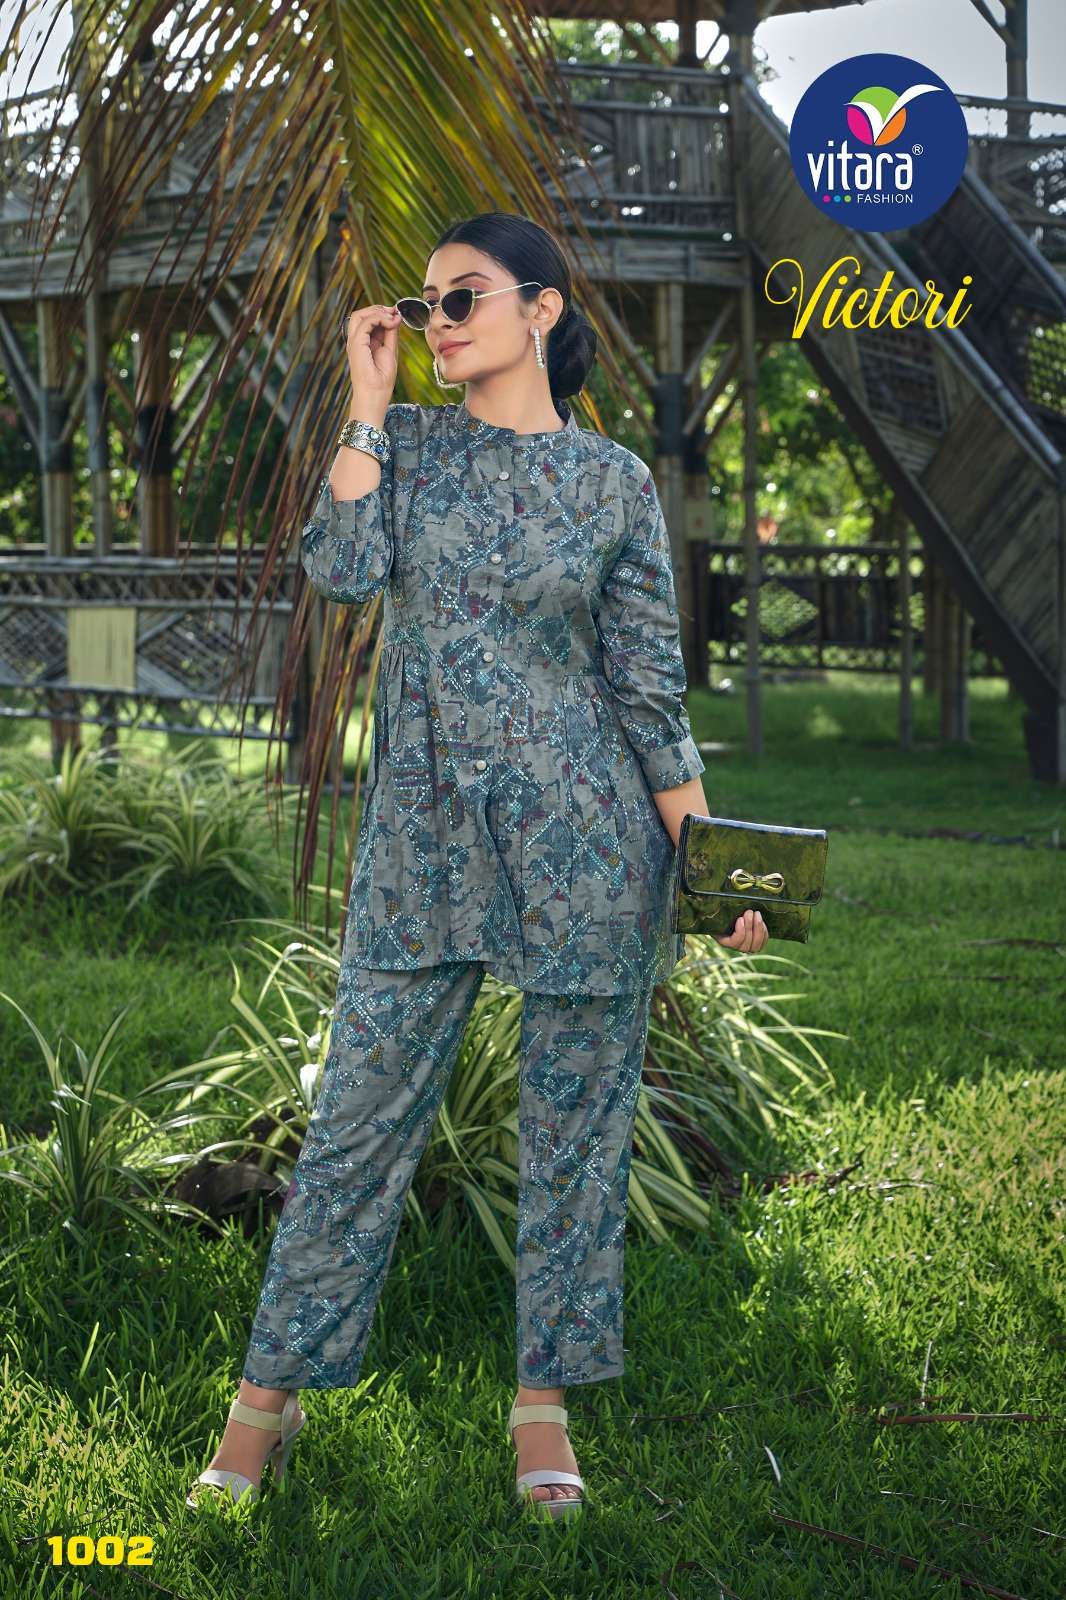 vitara fashion pick and choose coord set combo designer stylish printed pant and top coord set for women branded coord set for women collection